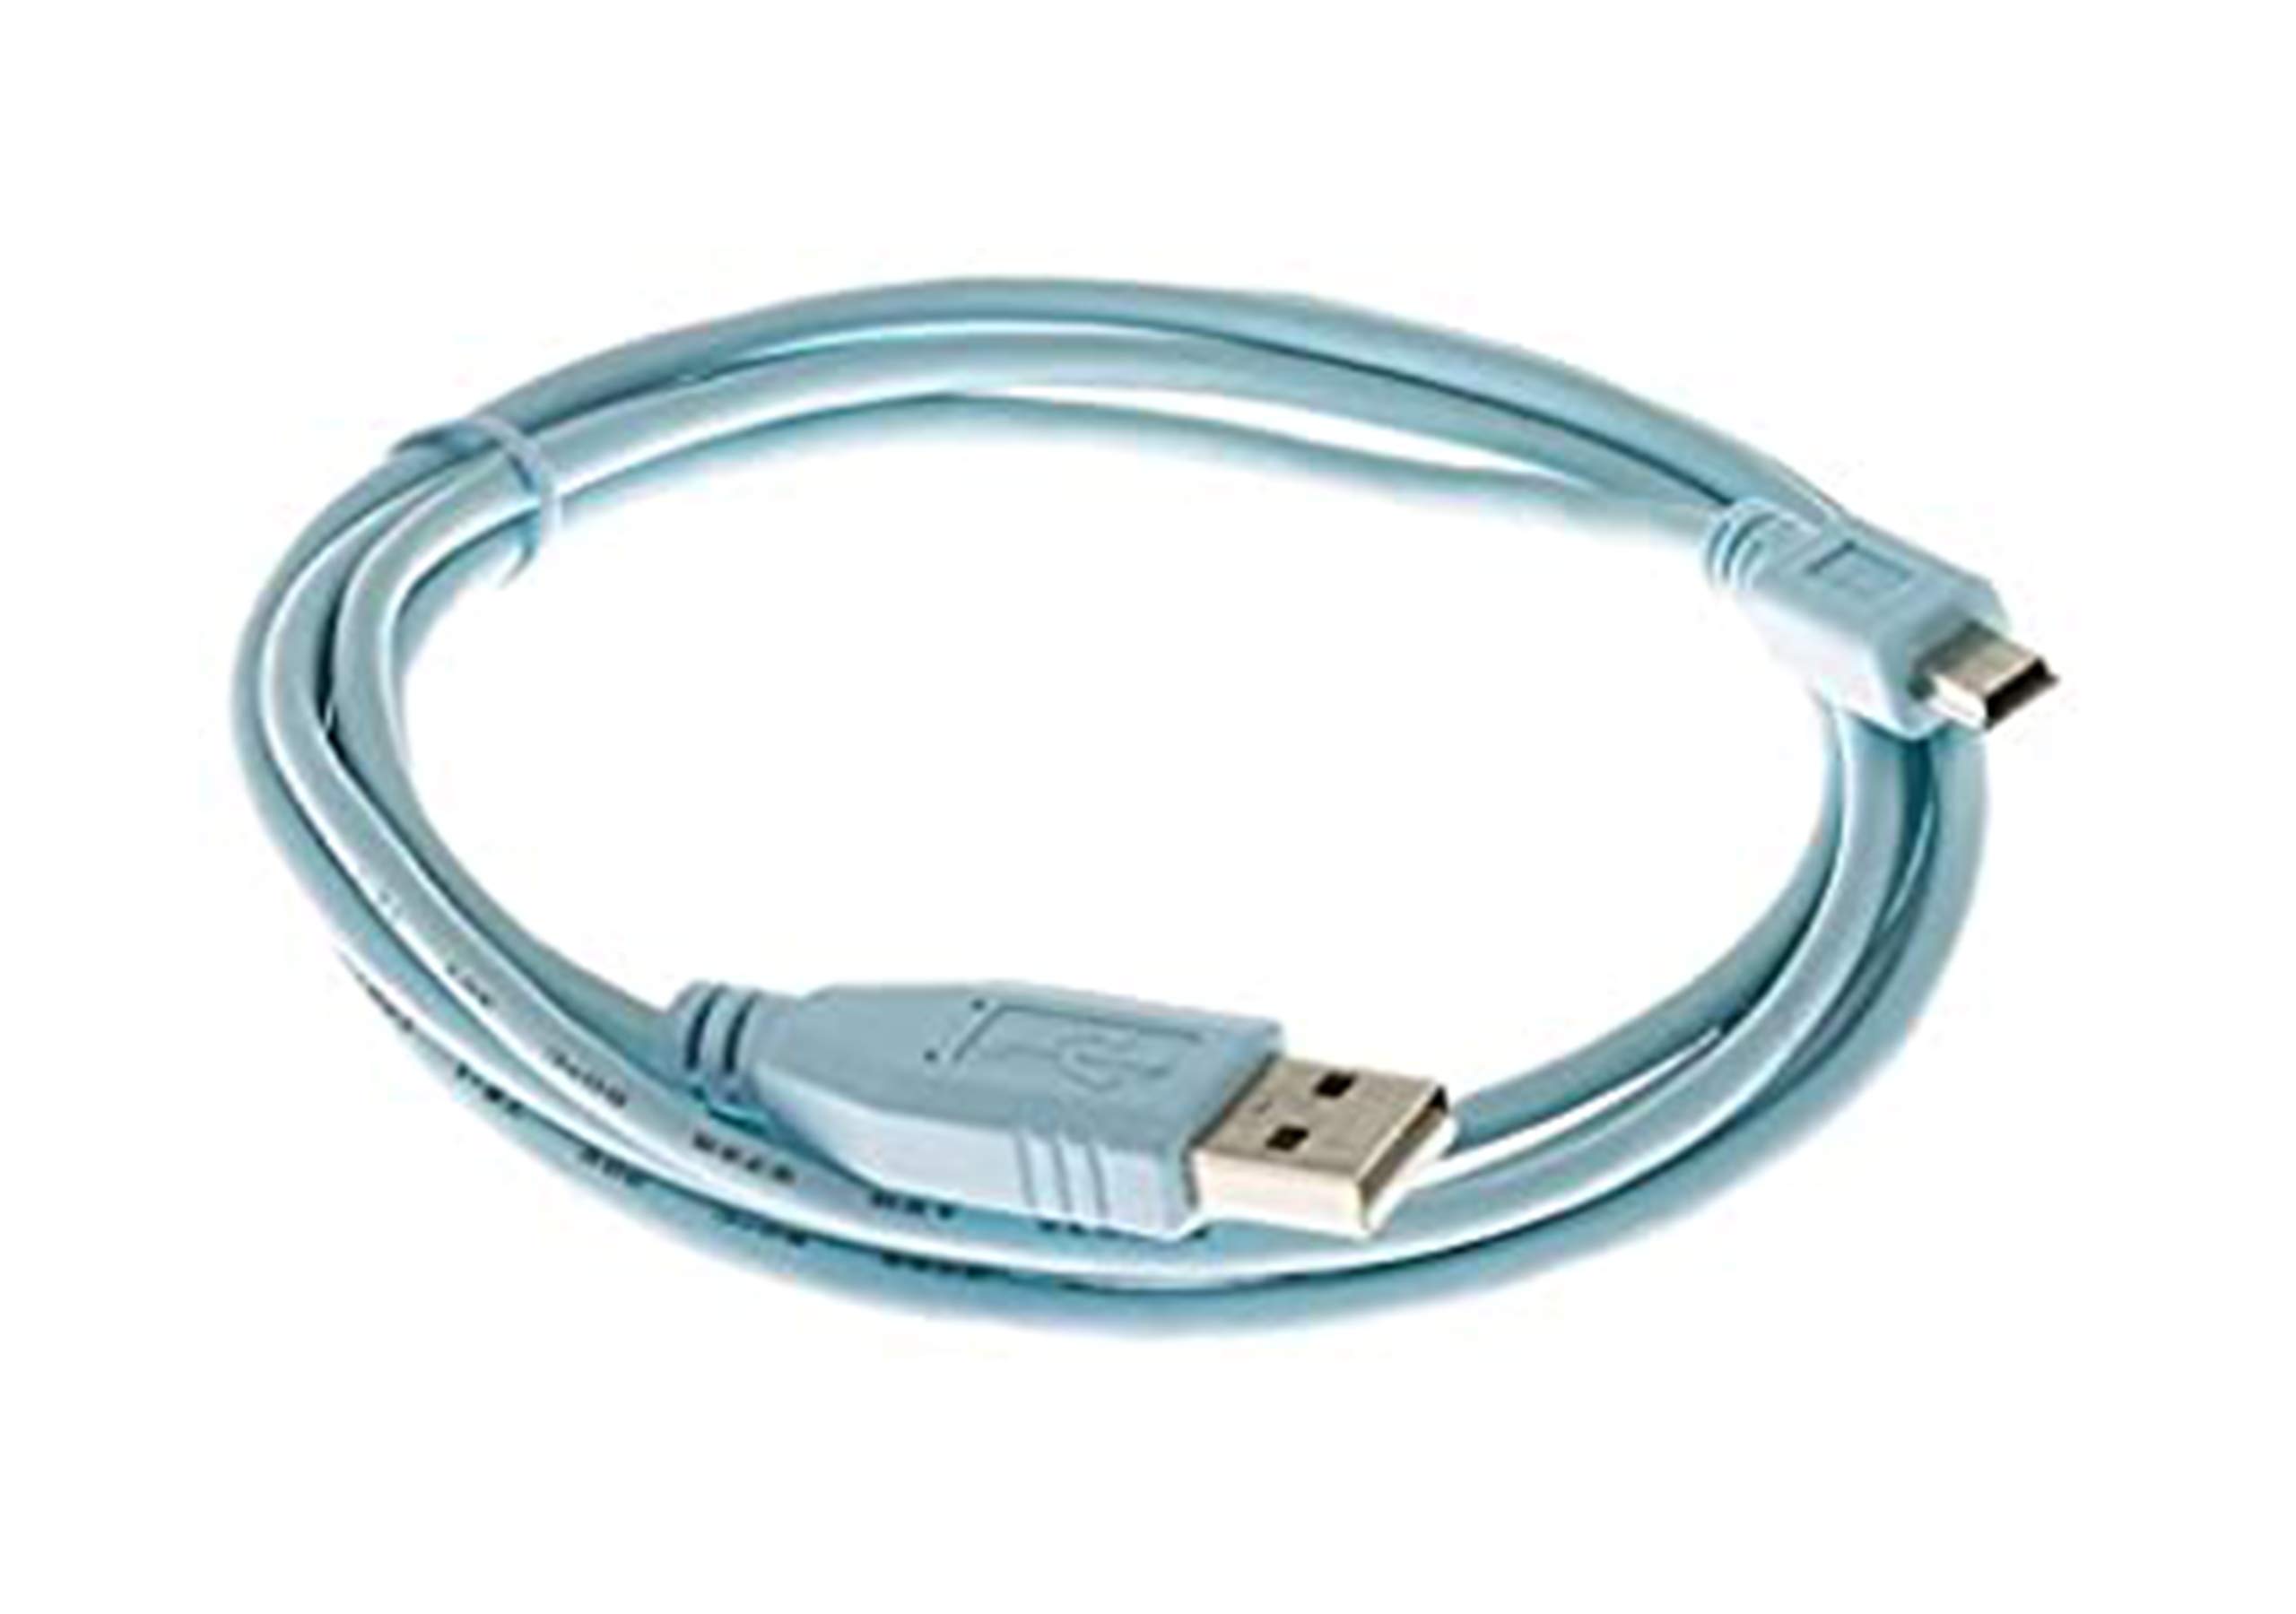 USB Console Cable, Documentation